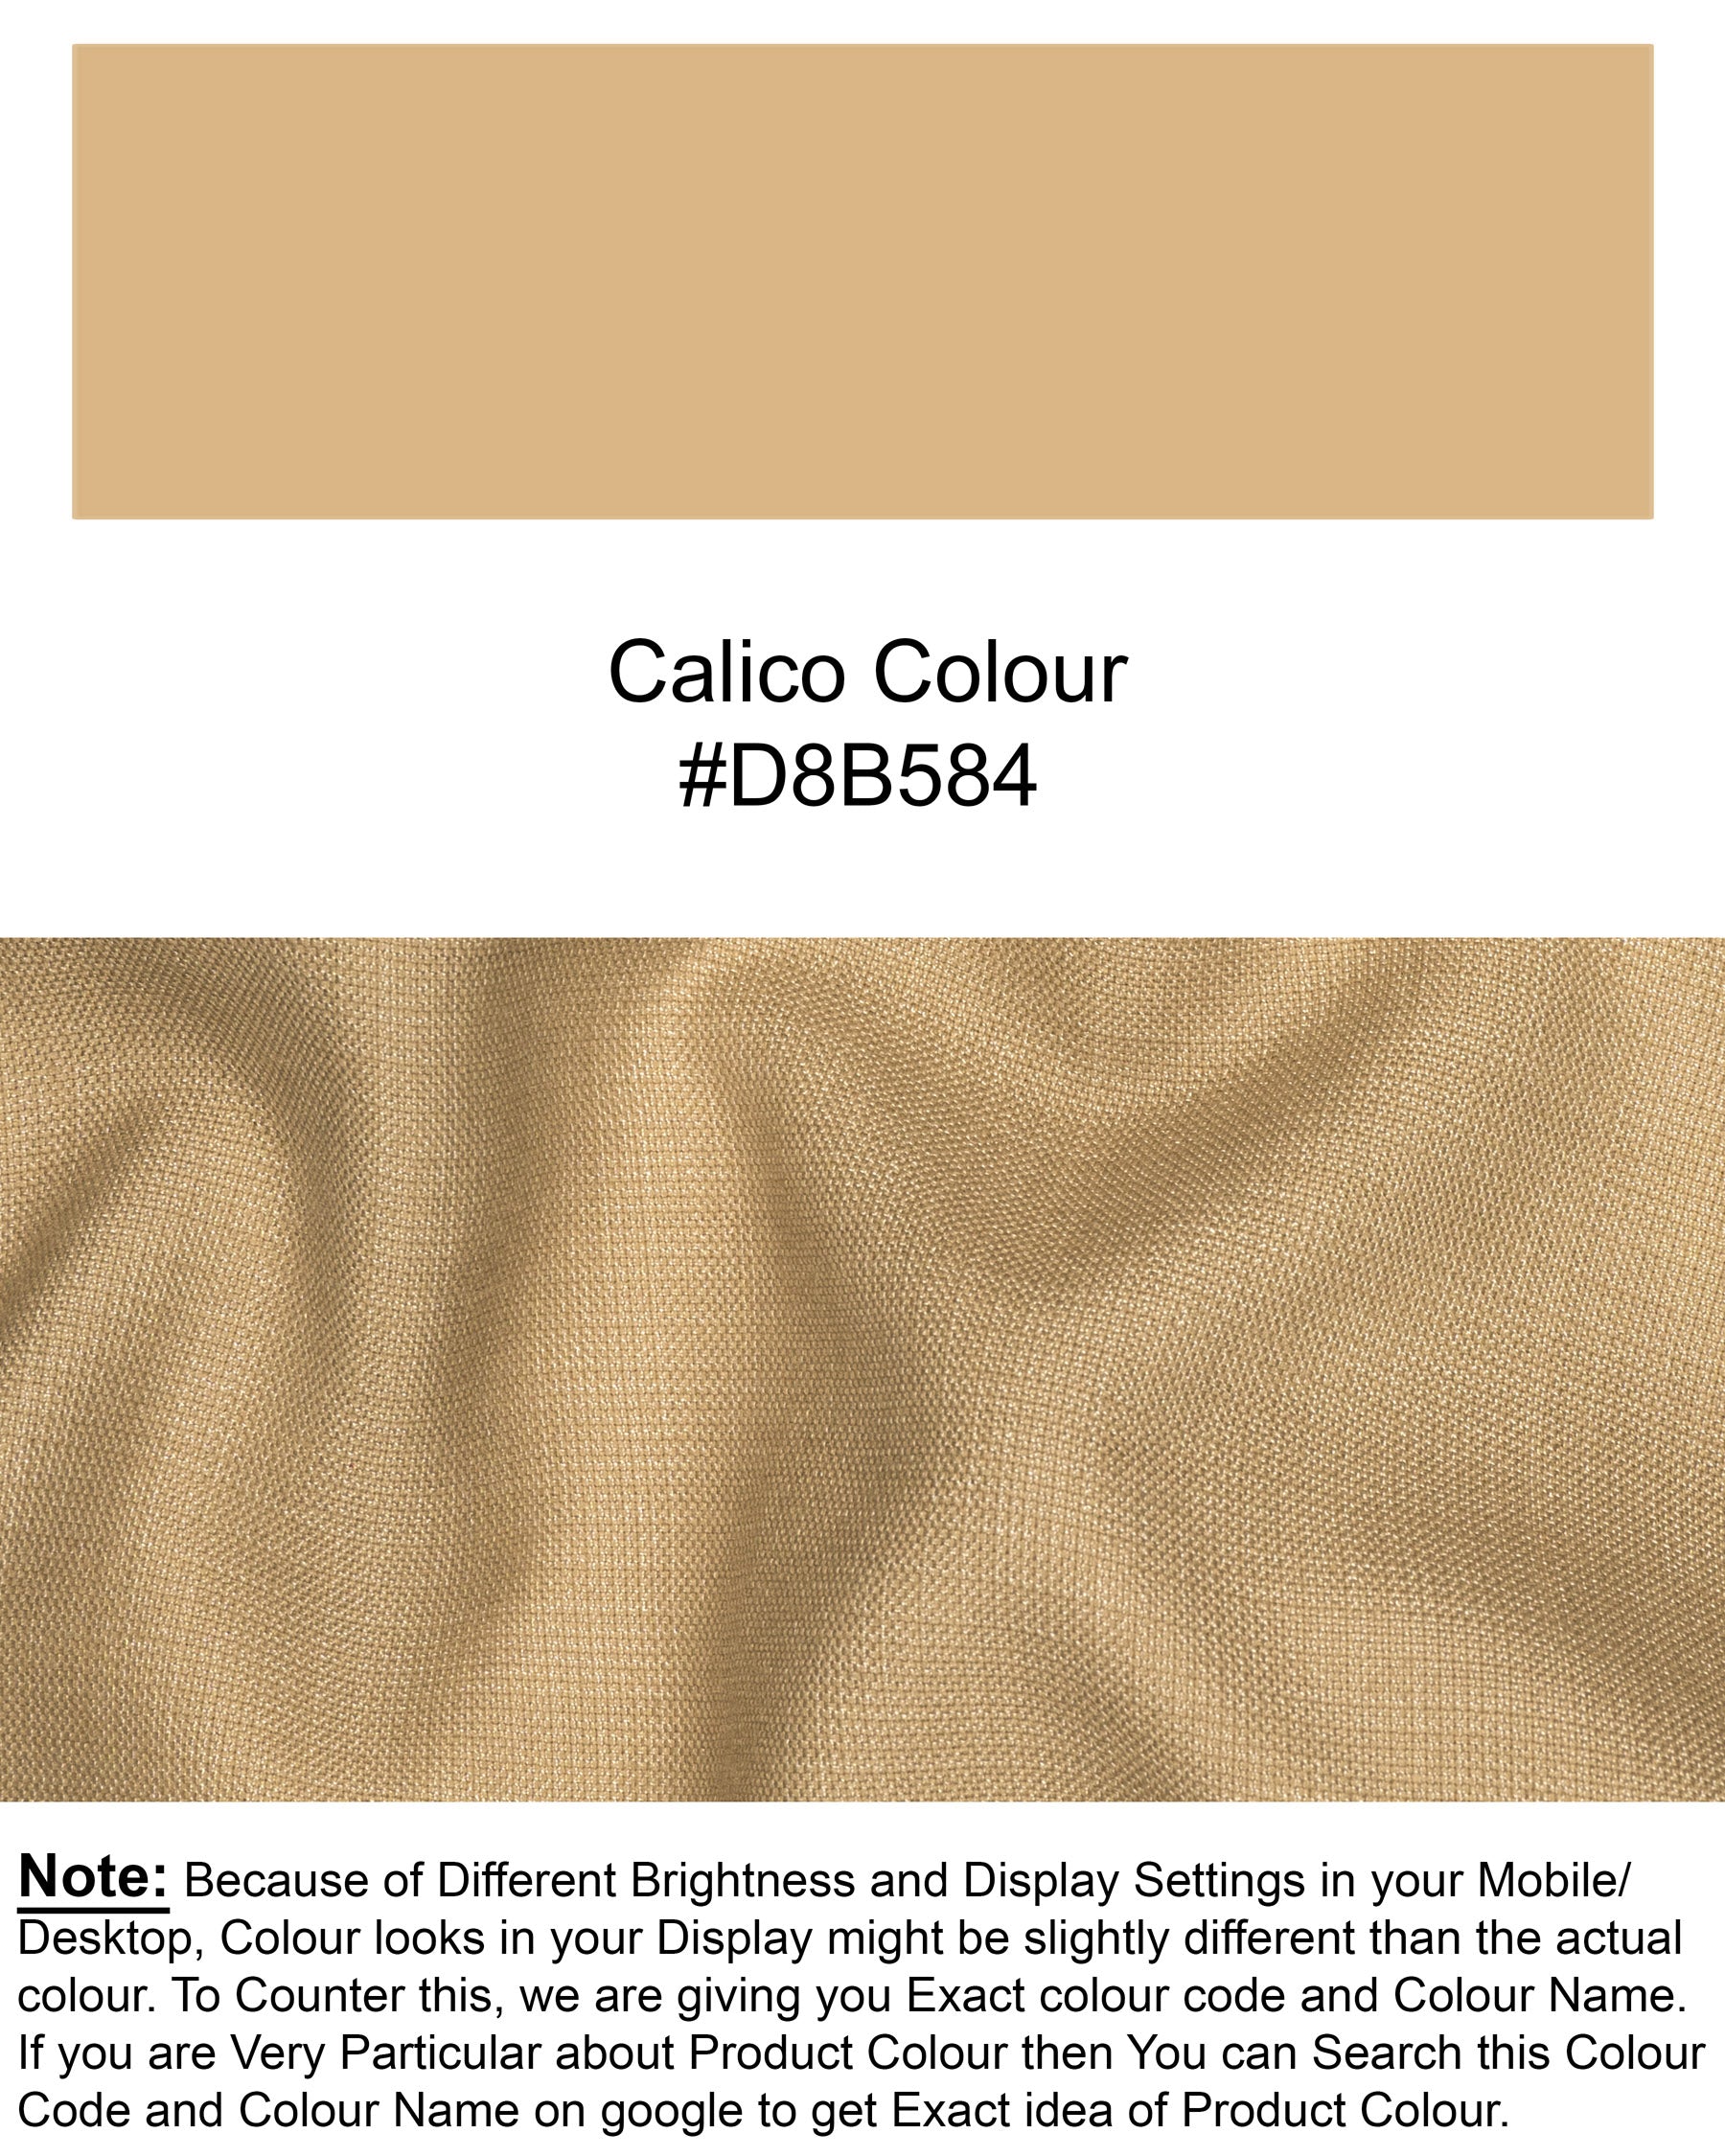 Calico Cream Patch Pockets Sports Blazer BL1466-D3-36,BL1466-D3-38,BL1466-D3-40,BL1466-D3-42,BL1466-D3-44,BL1466-D3-46,BL1466-D3-48,BL1466-D3-50,BL1466-D3-52,BL1466-D3-54,BL1466-D3-56,BL1466-D3-58,BL1466-D3-60